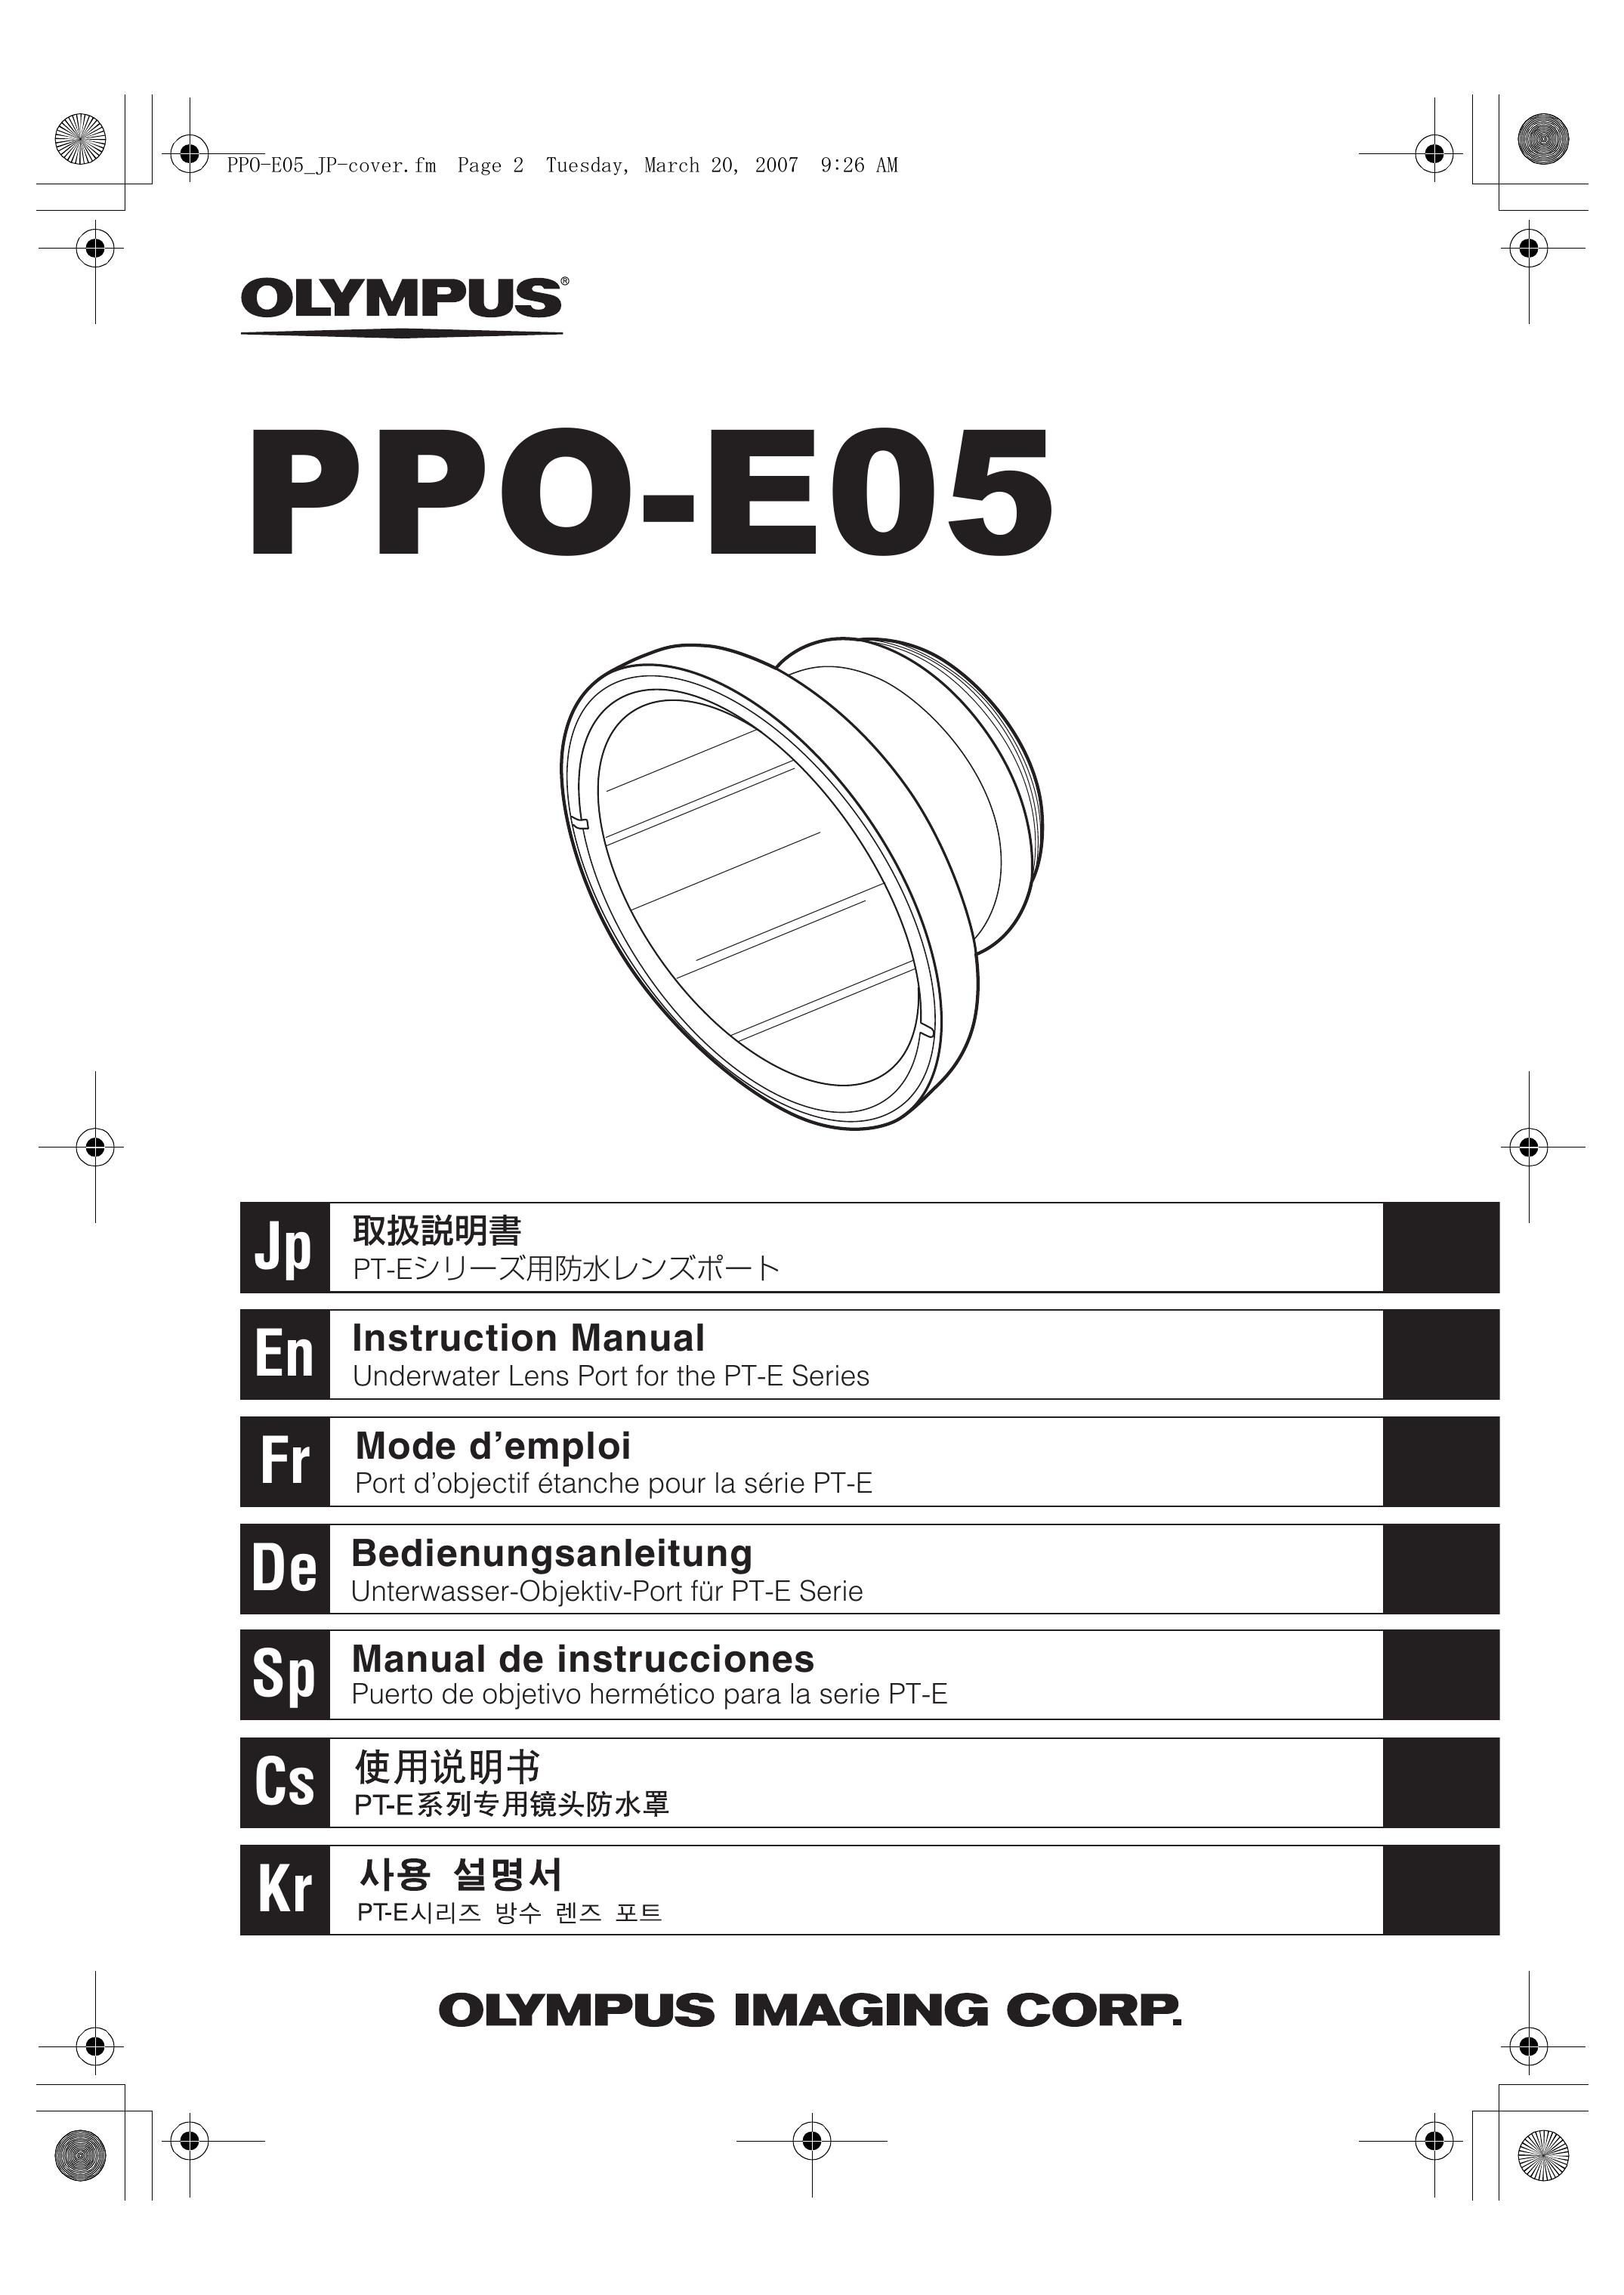 Olympus PPO-E05 Camera Lens User Manual